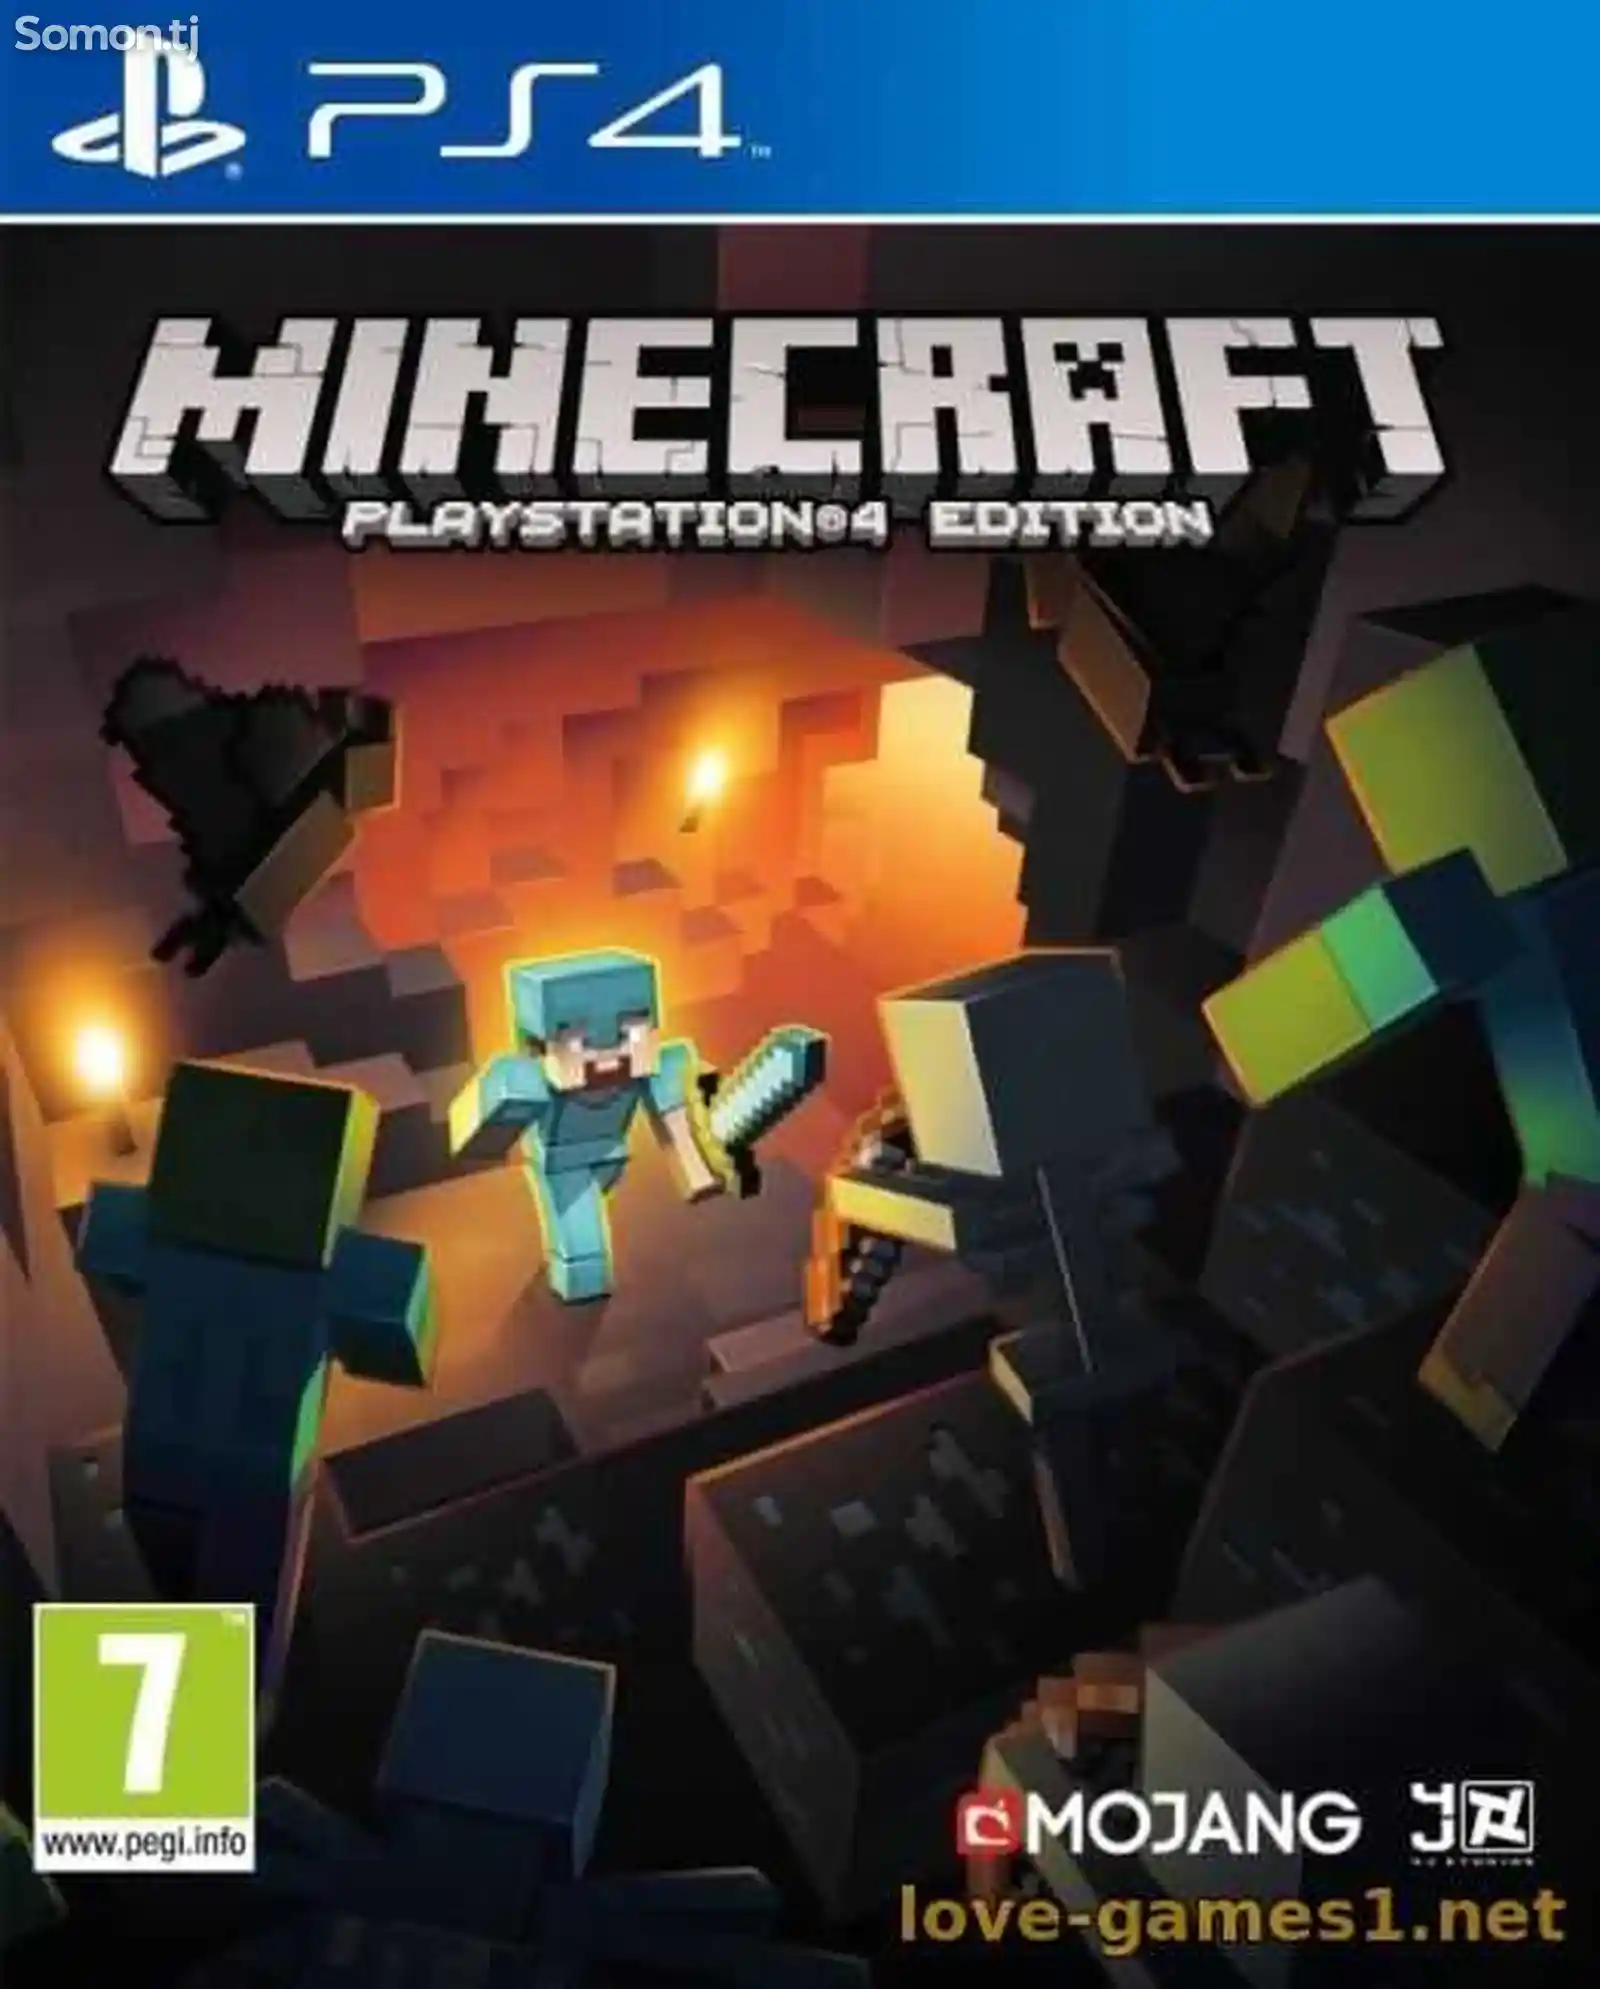 Игра Minecraft PlayStation 4 Edition v.2.72-1